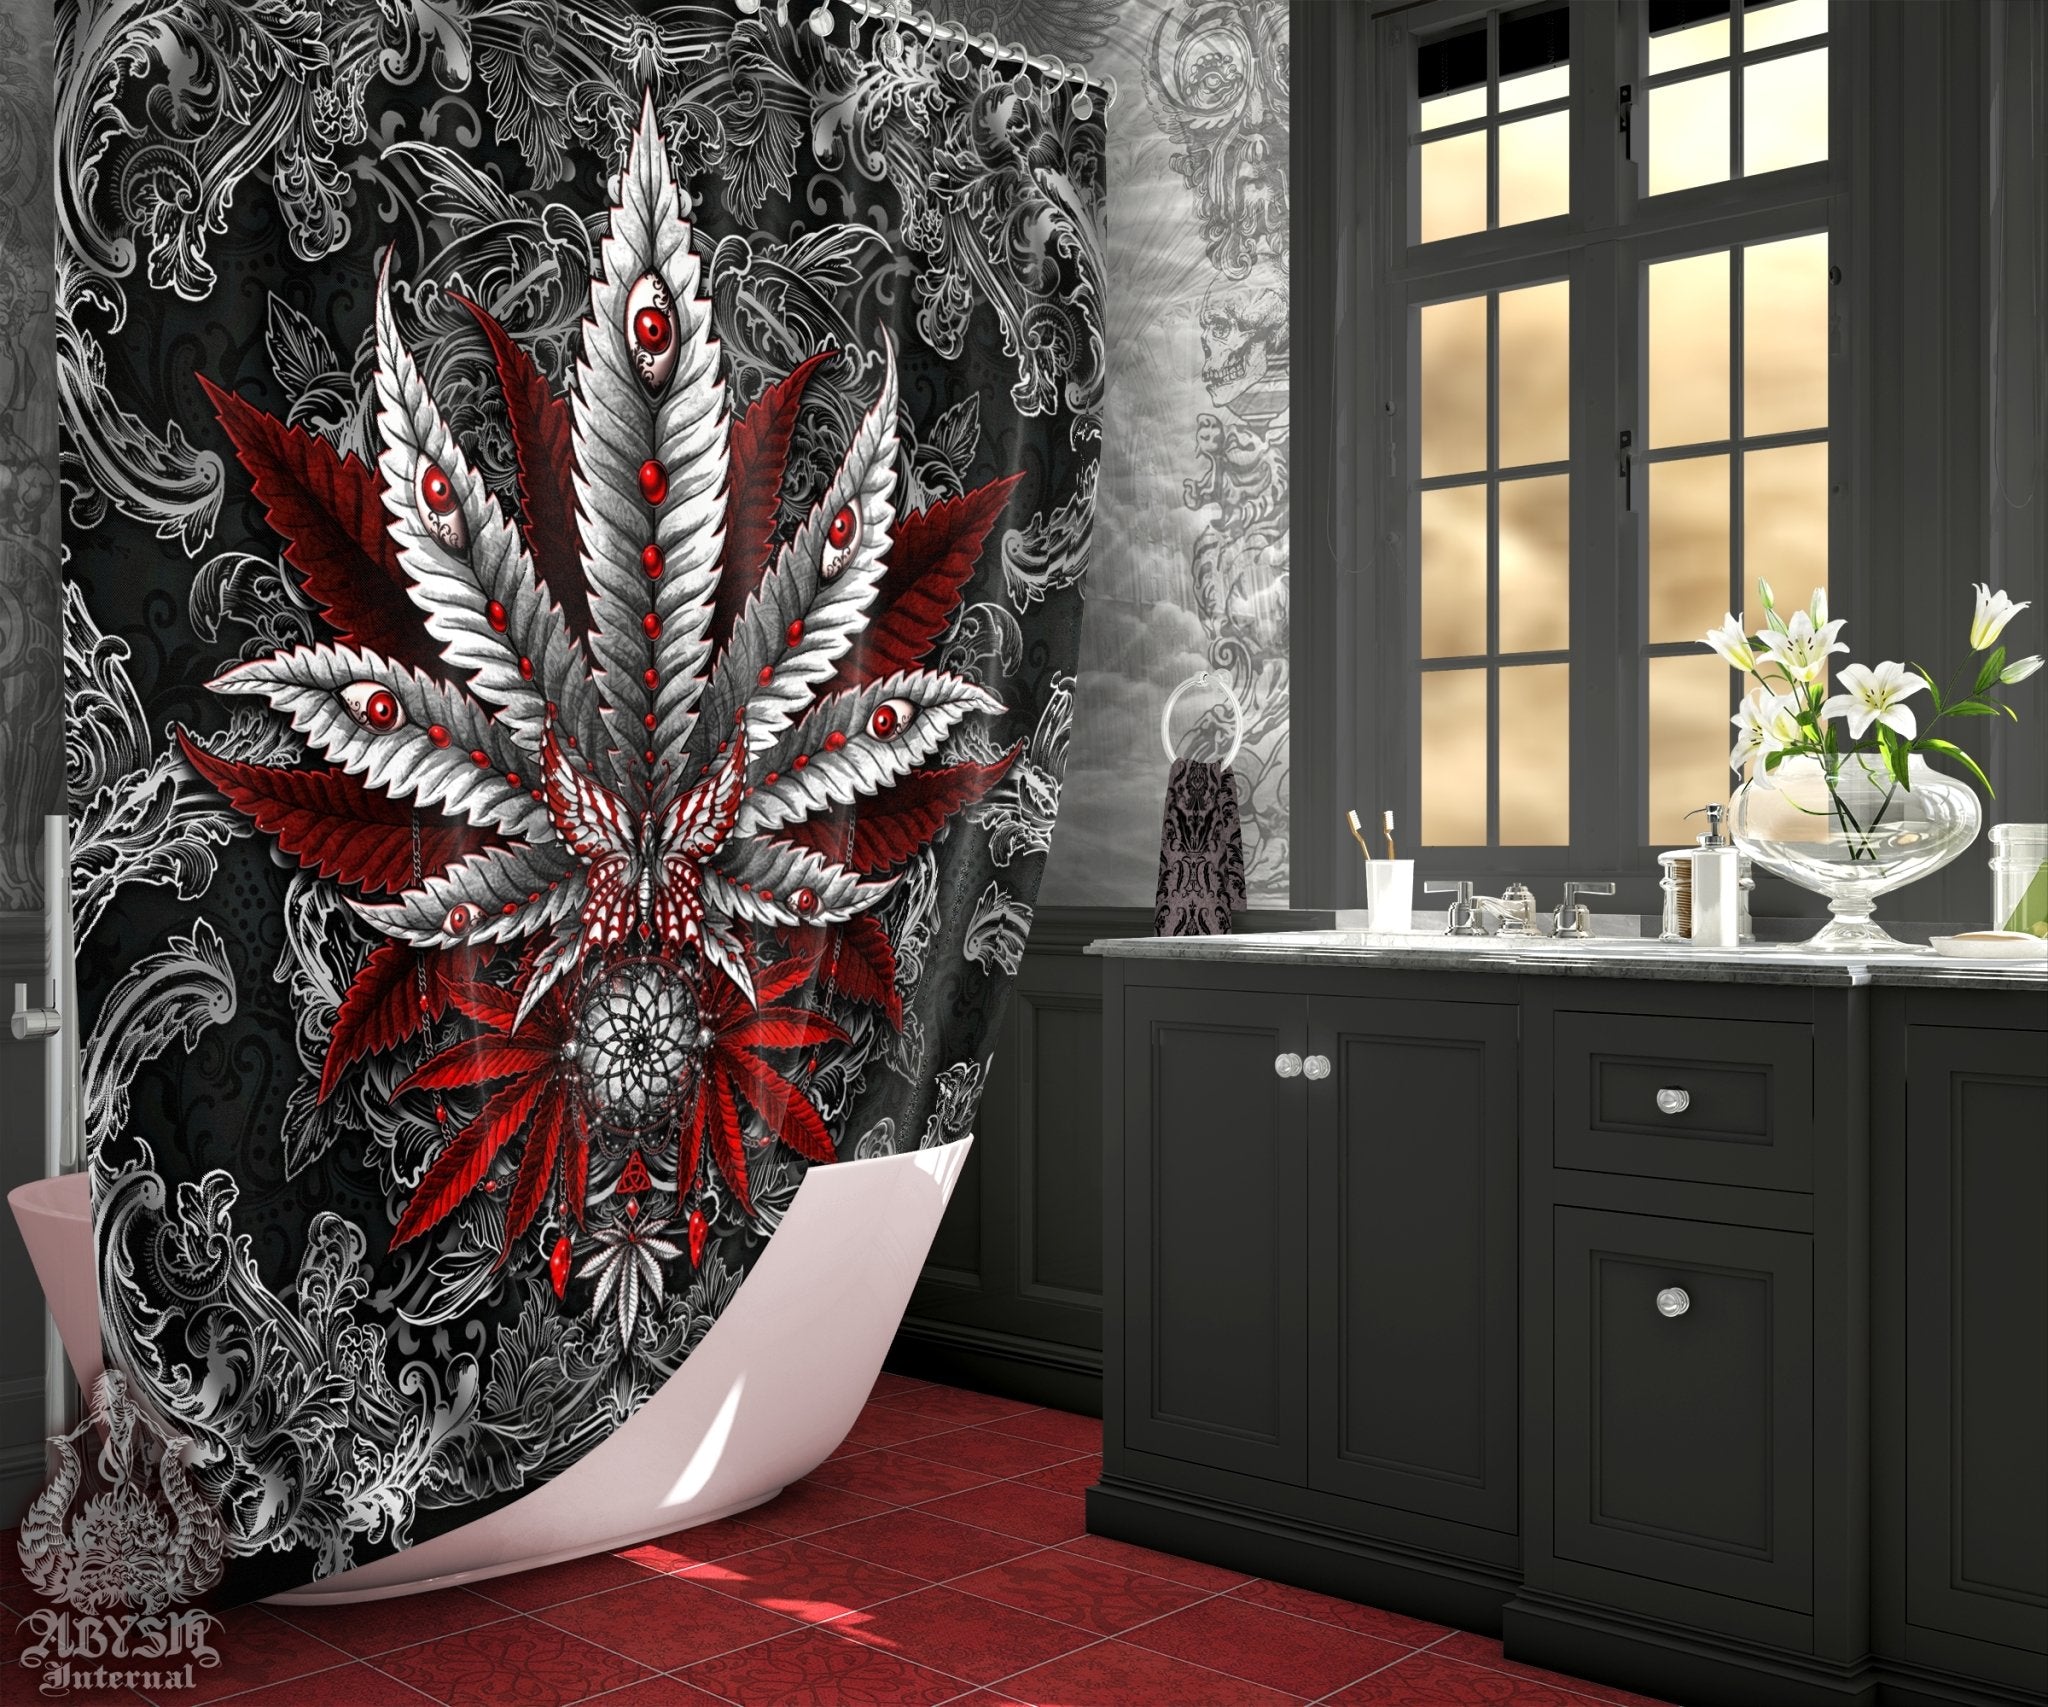 Weed Shower Curtain, Gothic Bathroom Decor, Cannabis Print, Alternative 420 Home Art - Marijuana, Dark - Abysm Internal